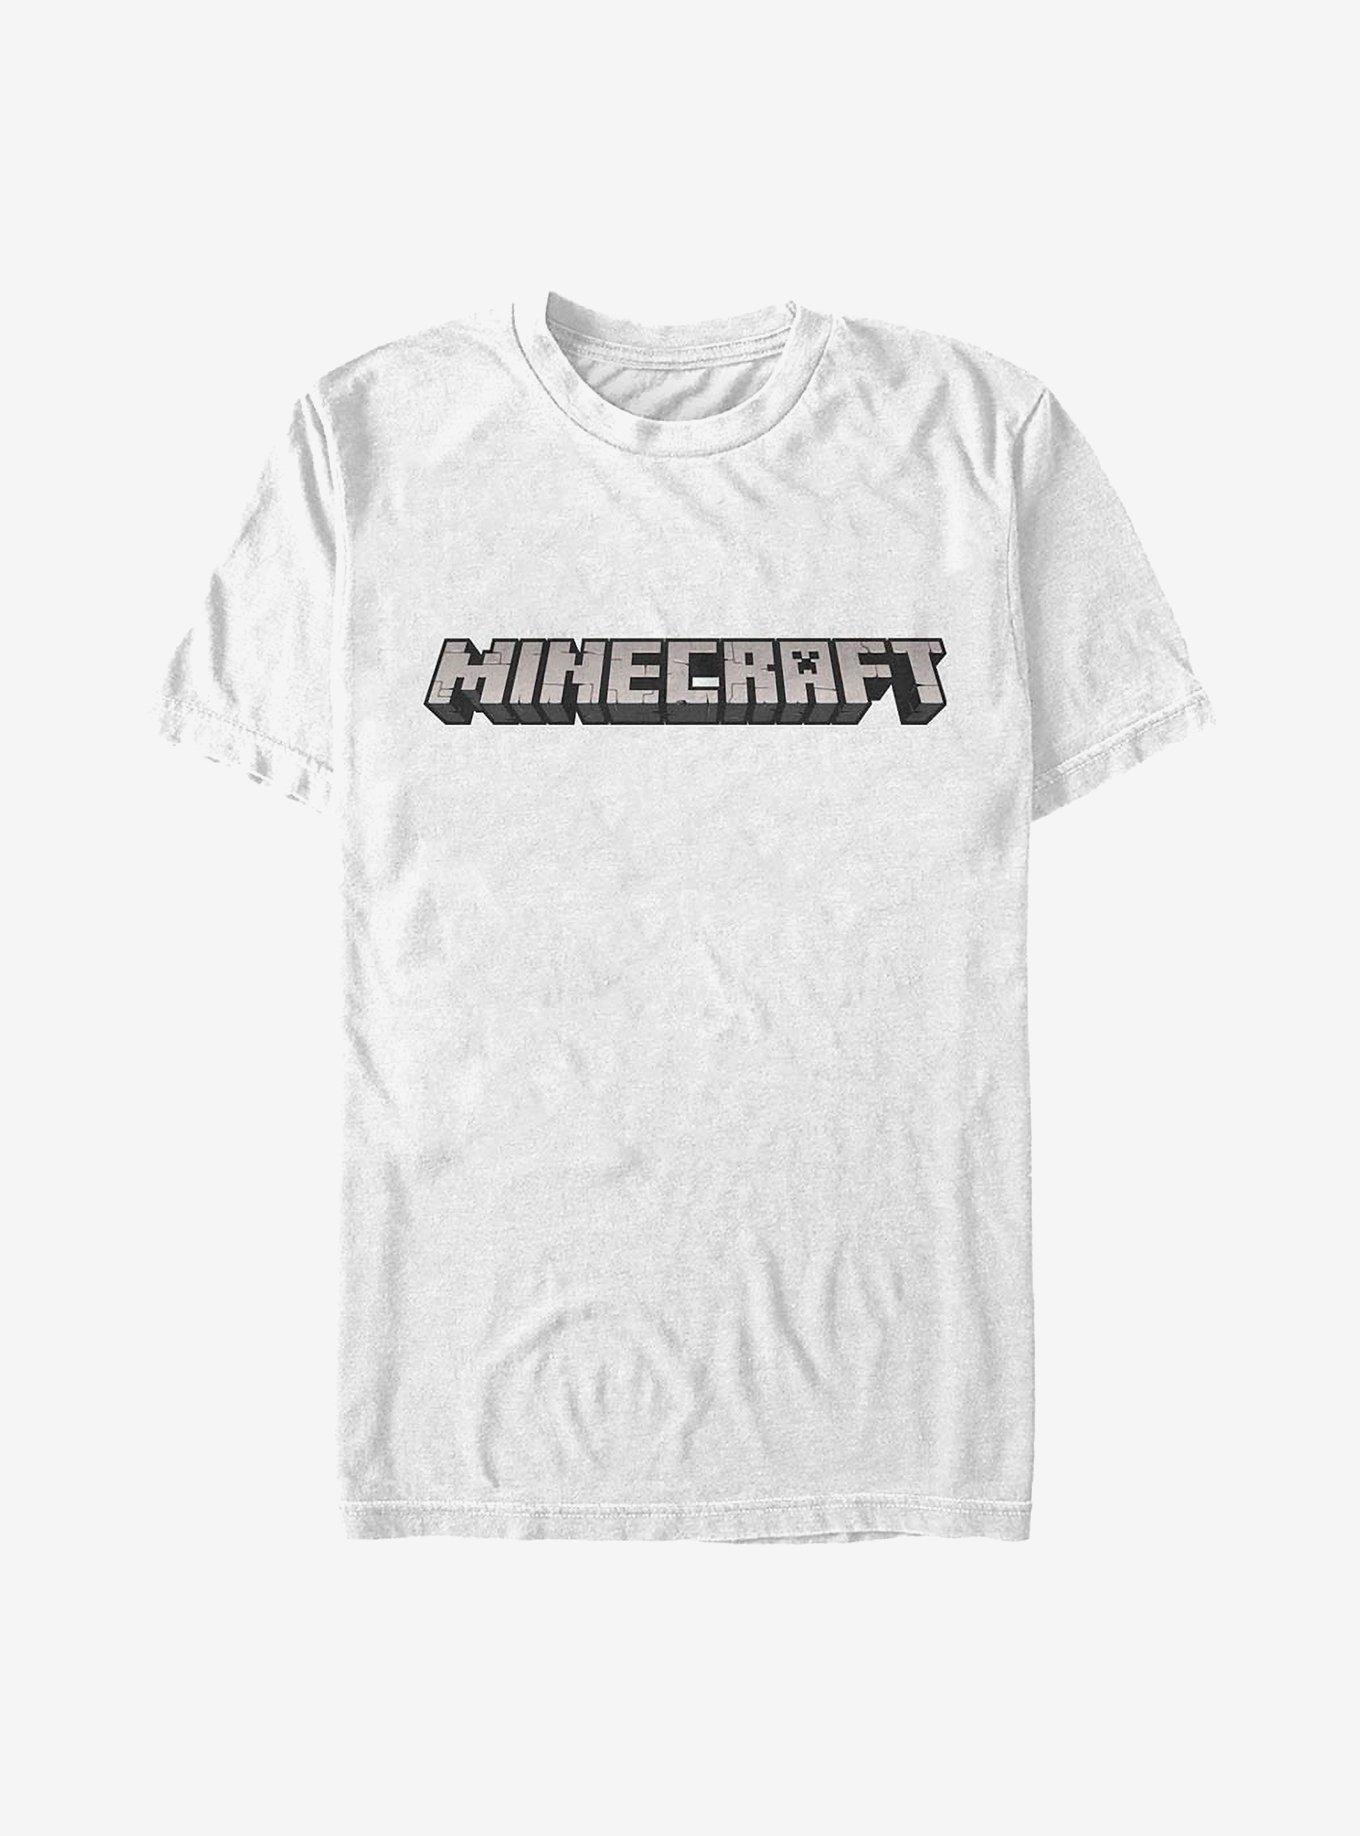 Minecraft Minecraft Logo White T-Shirt, WHITE, hi-res